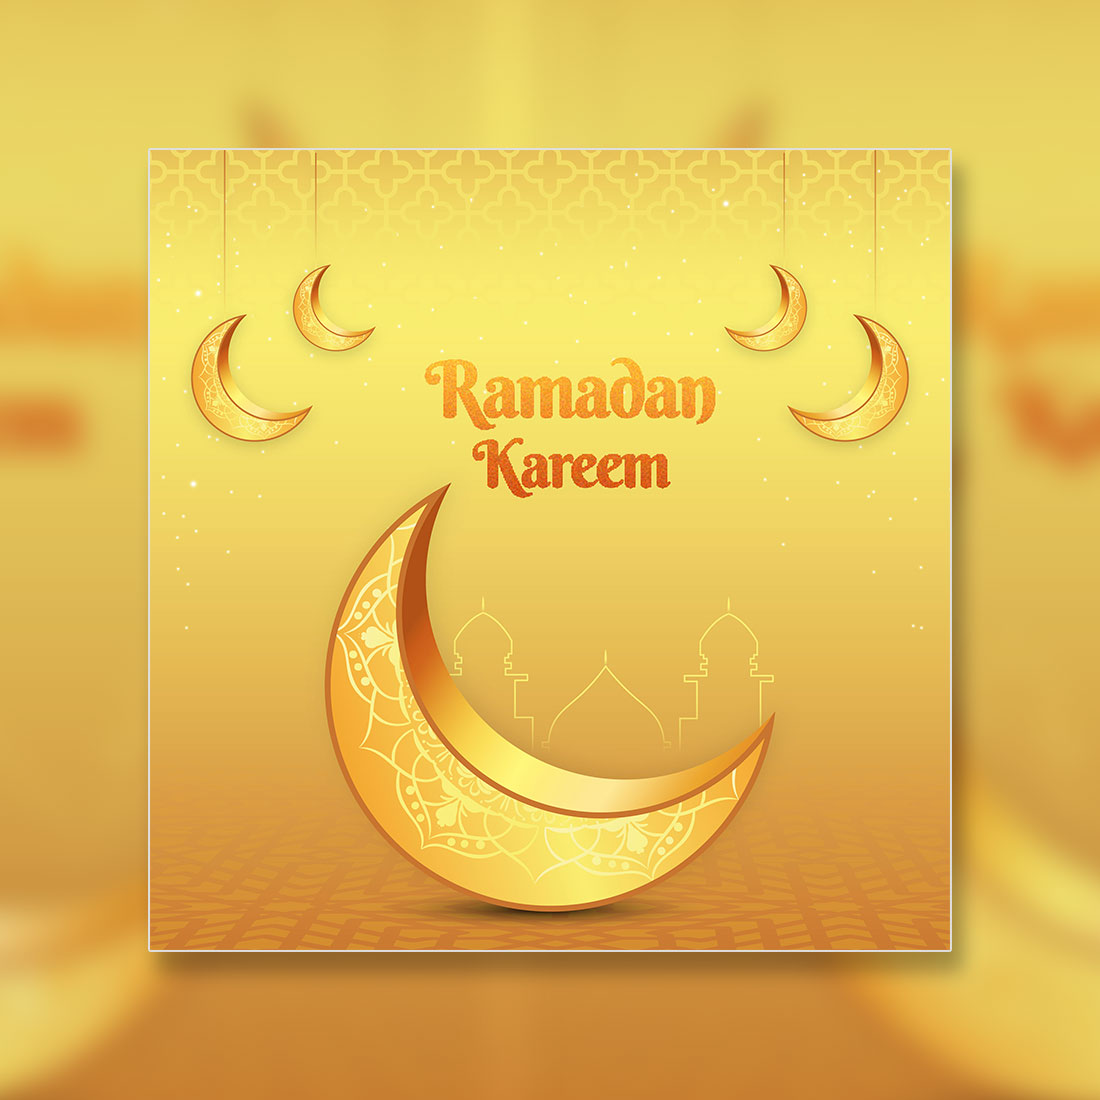 Ramadan Kareem greeting card design with Islamic background cover image.